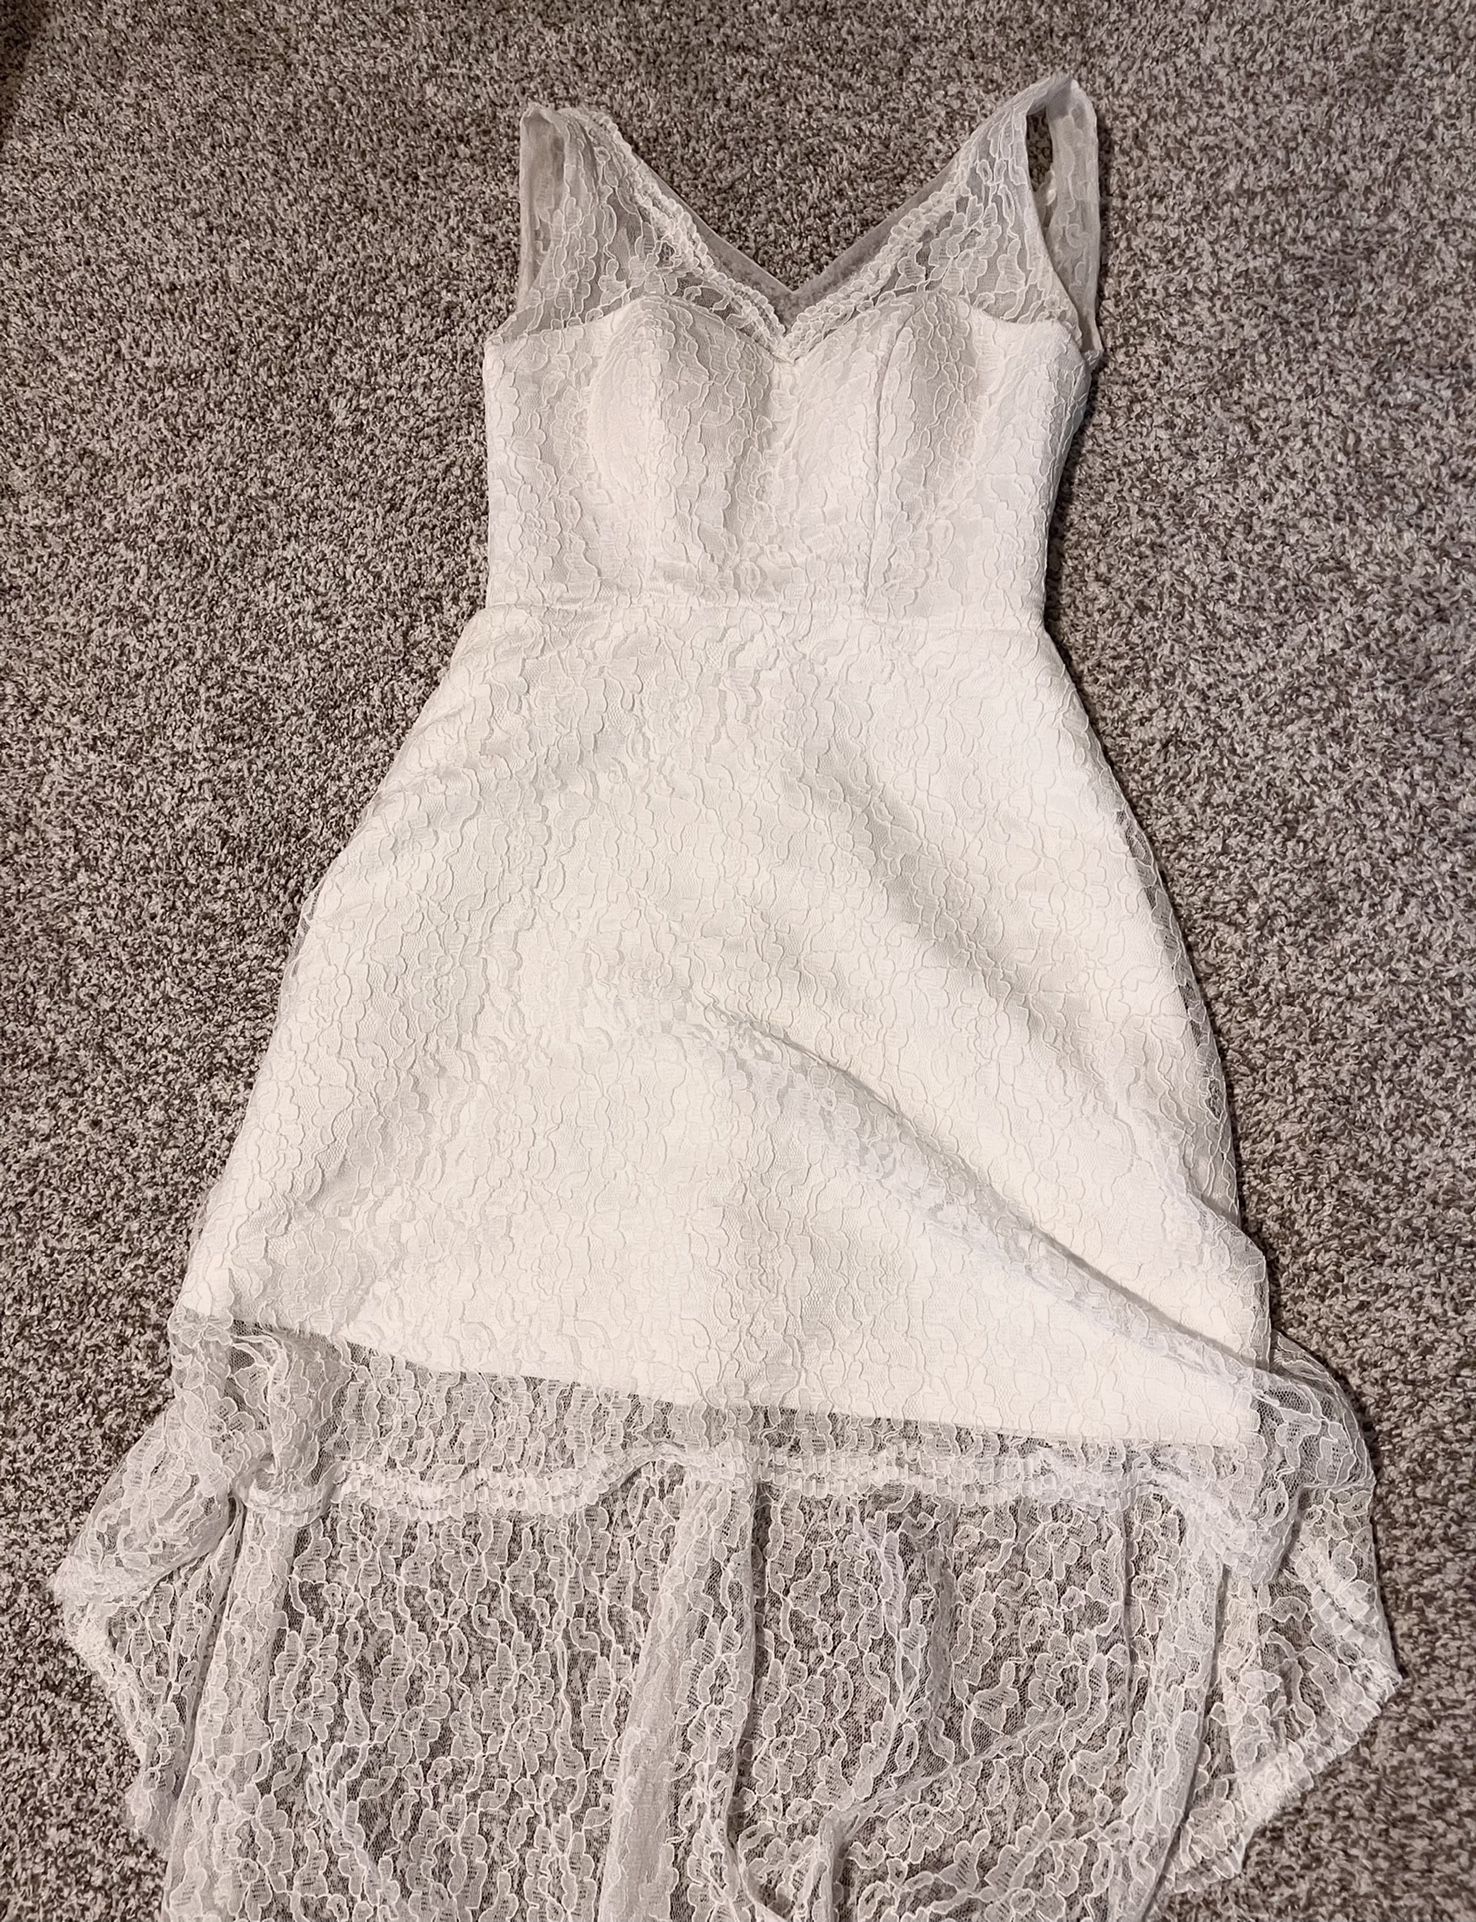 White Wedding Dress BRAND NEW 